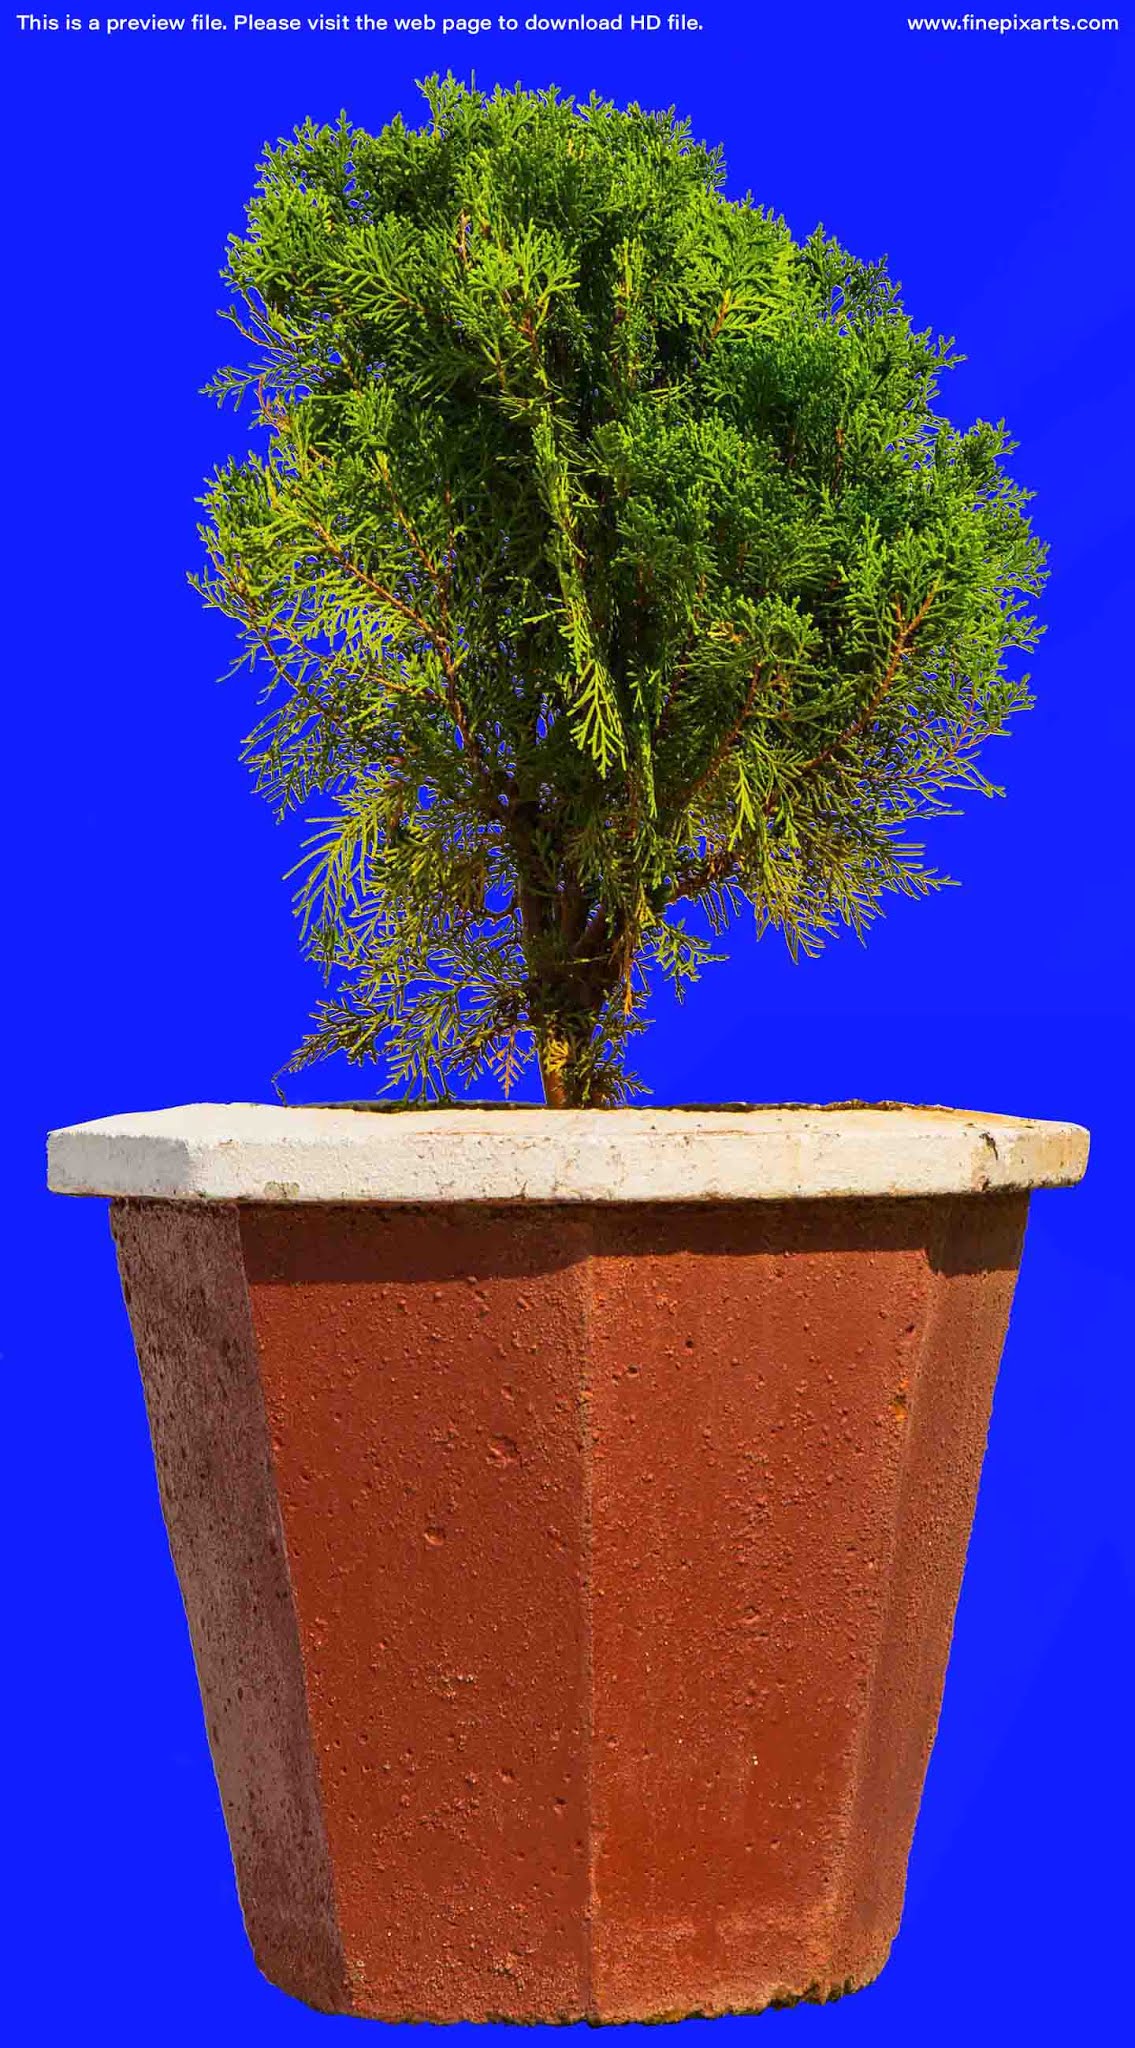 Cypress Garden Plant Texture 00001